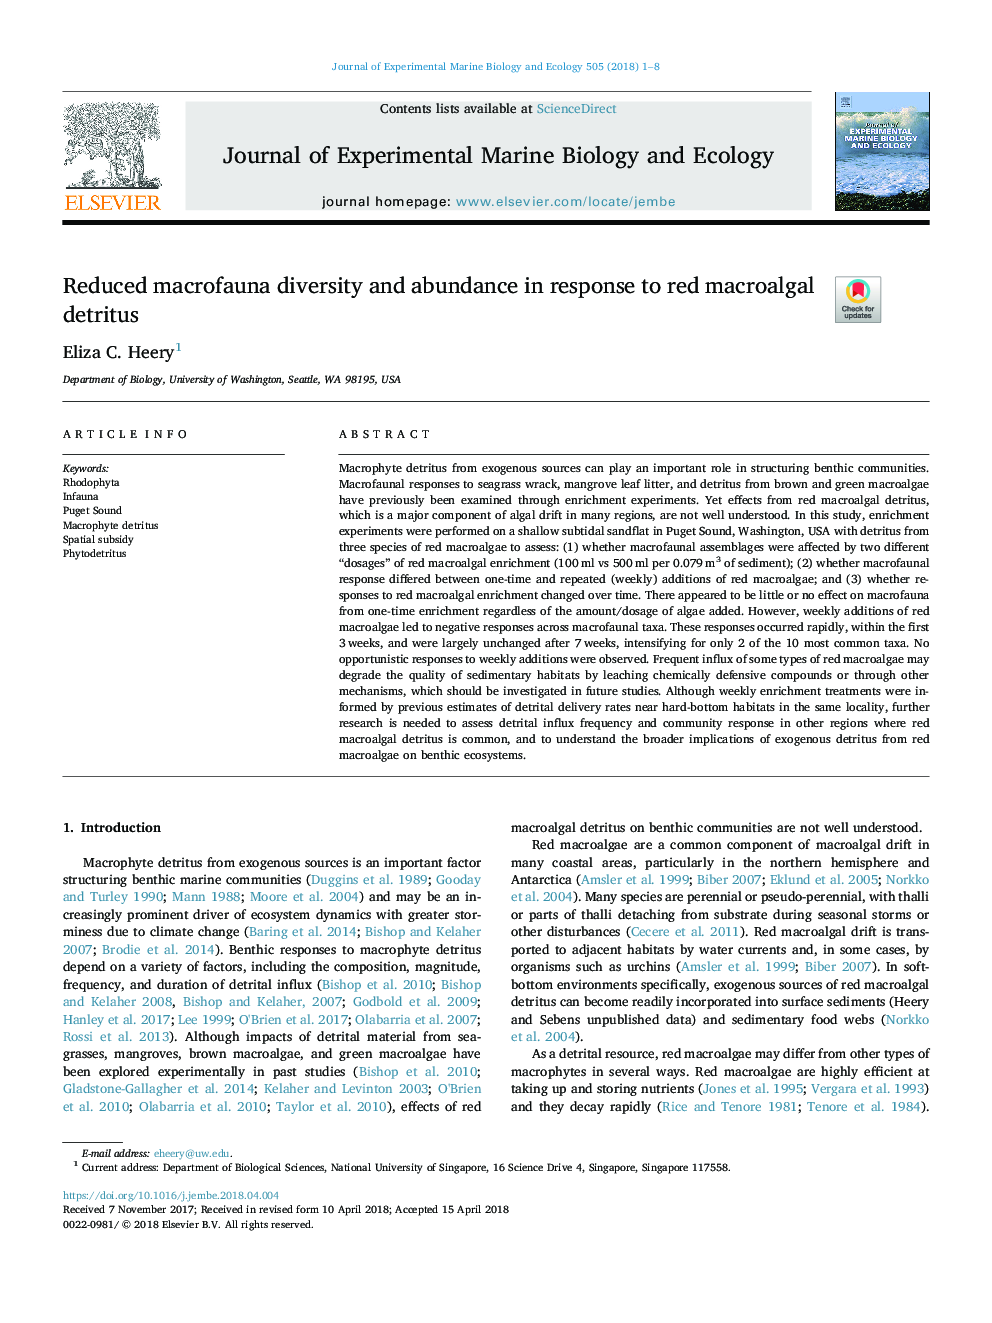 Reduced macrofauna diversity and abundance in response to red macroalgal detritus